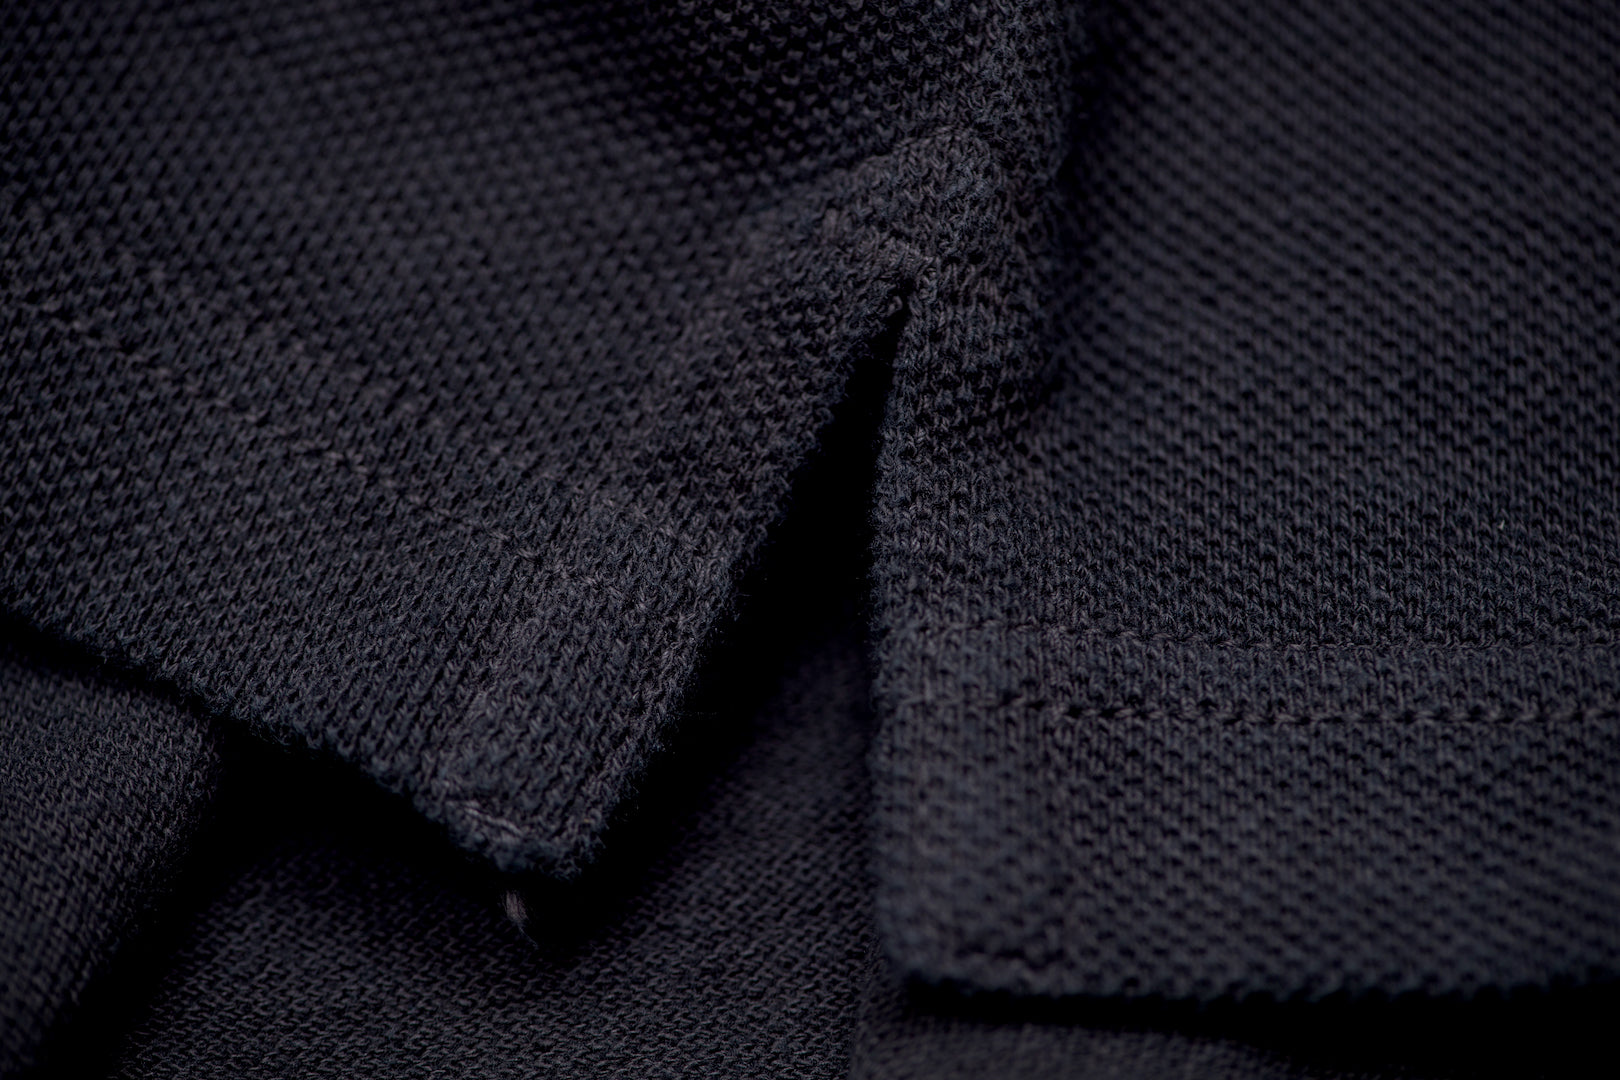 UES 'Kanoko' Polo Shirt (Black)